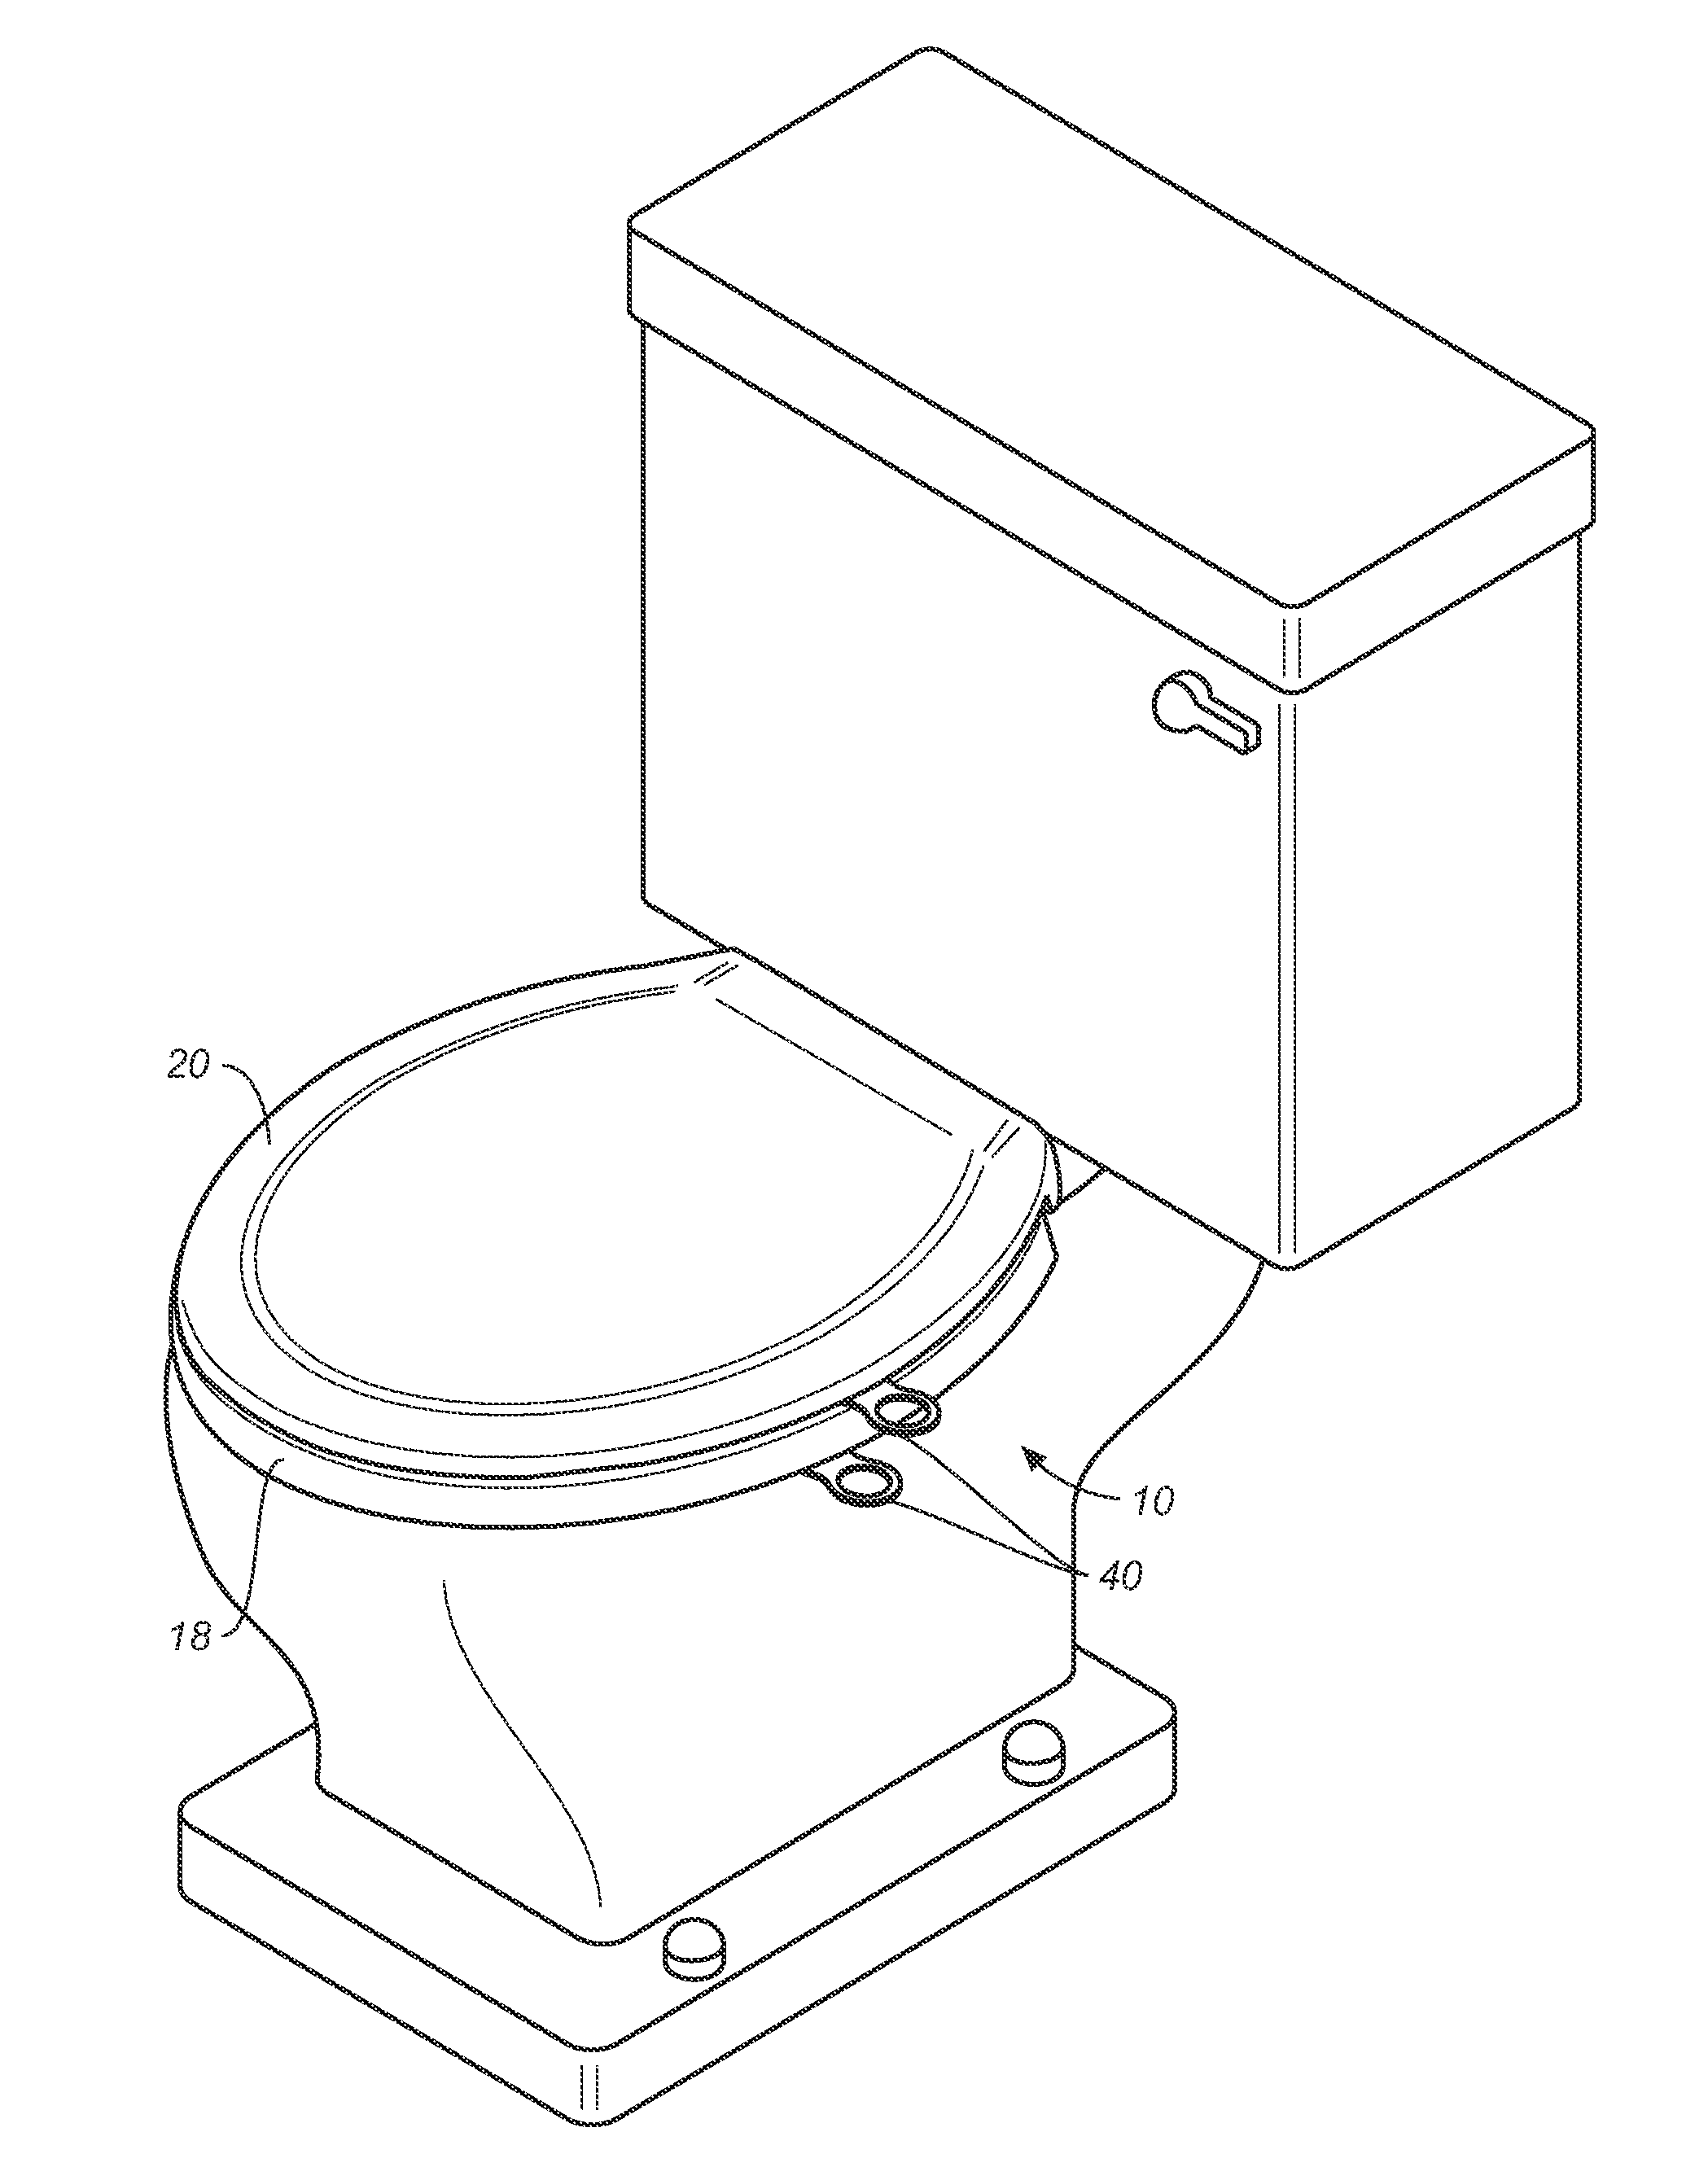 Disposable toilet seat lift apparatus